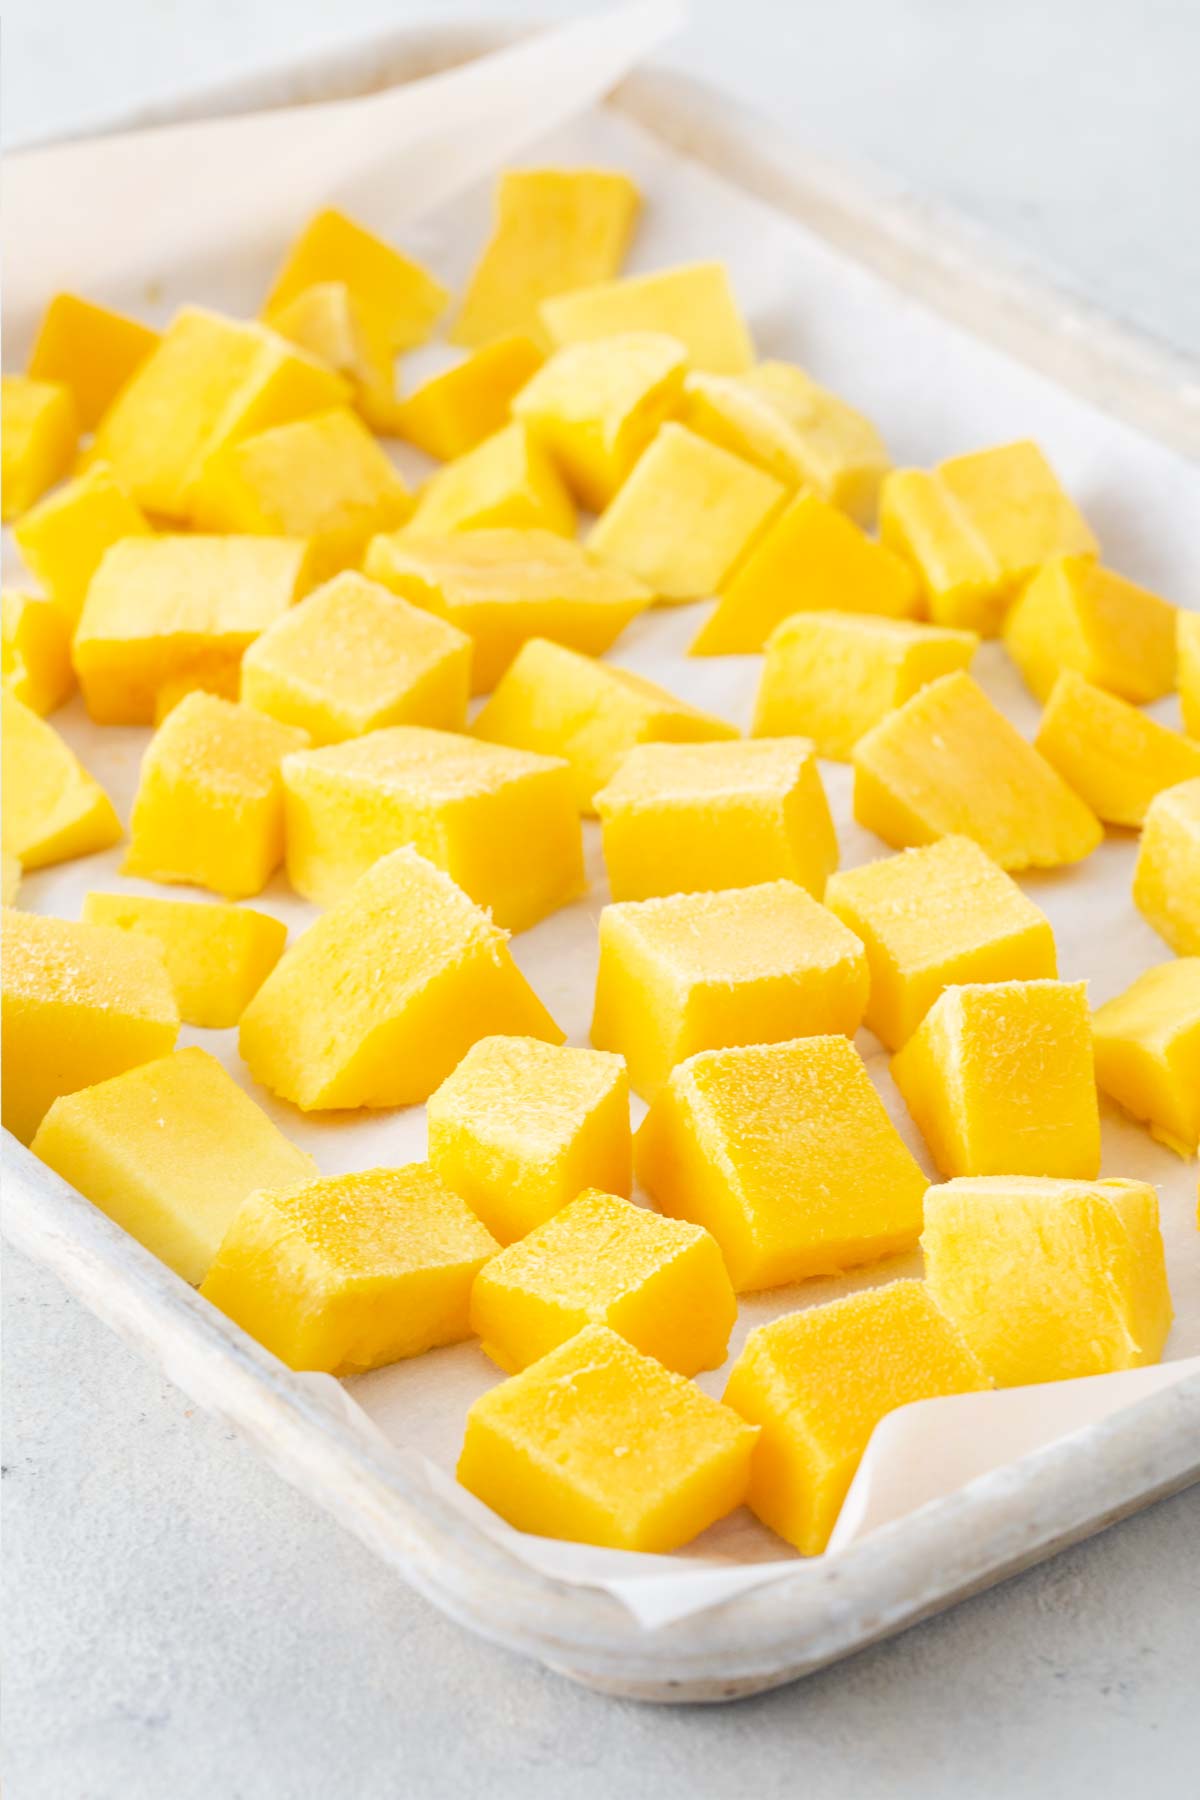 Frozen mangoes on a baking sheet.